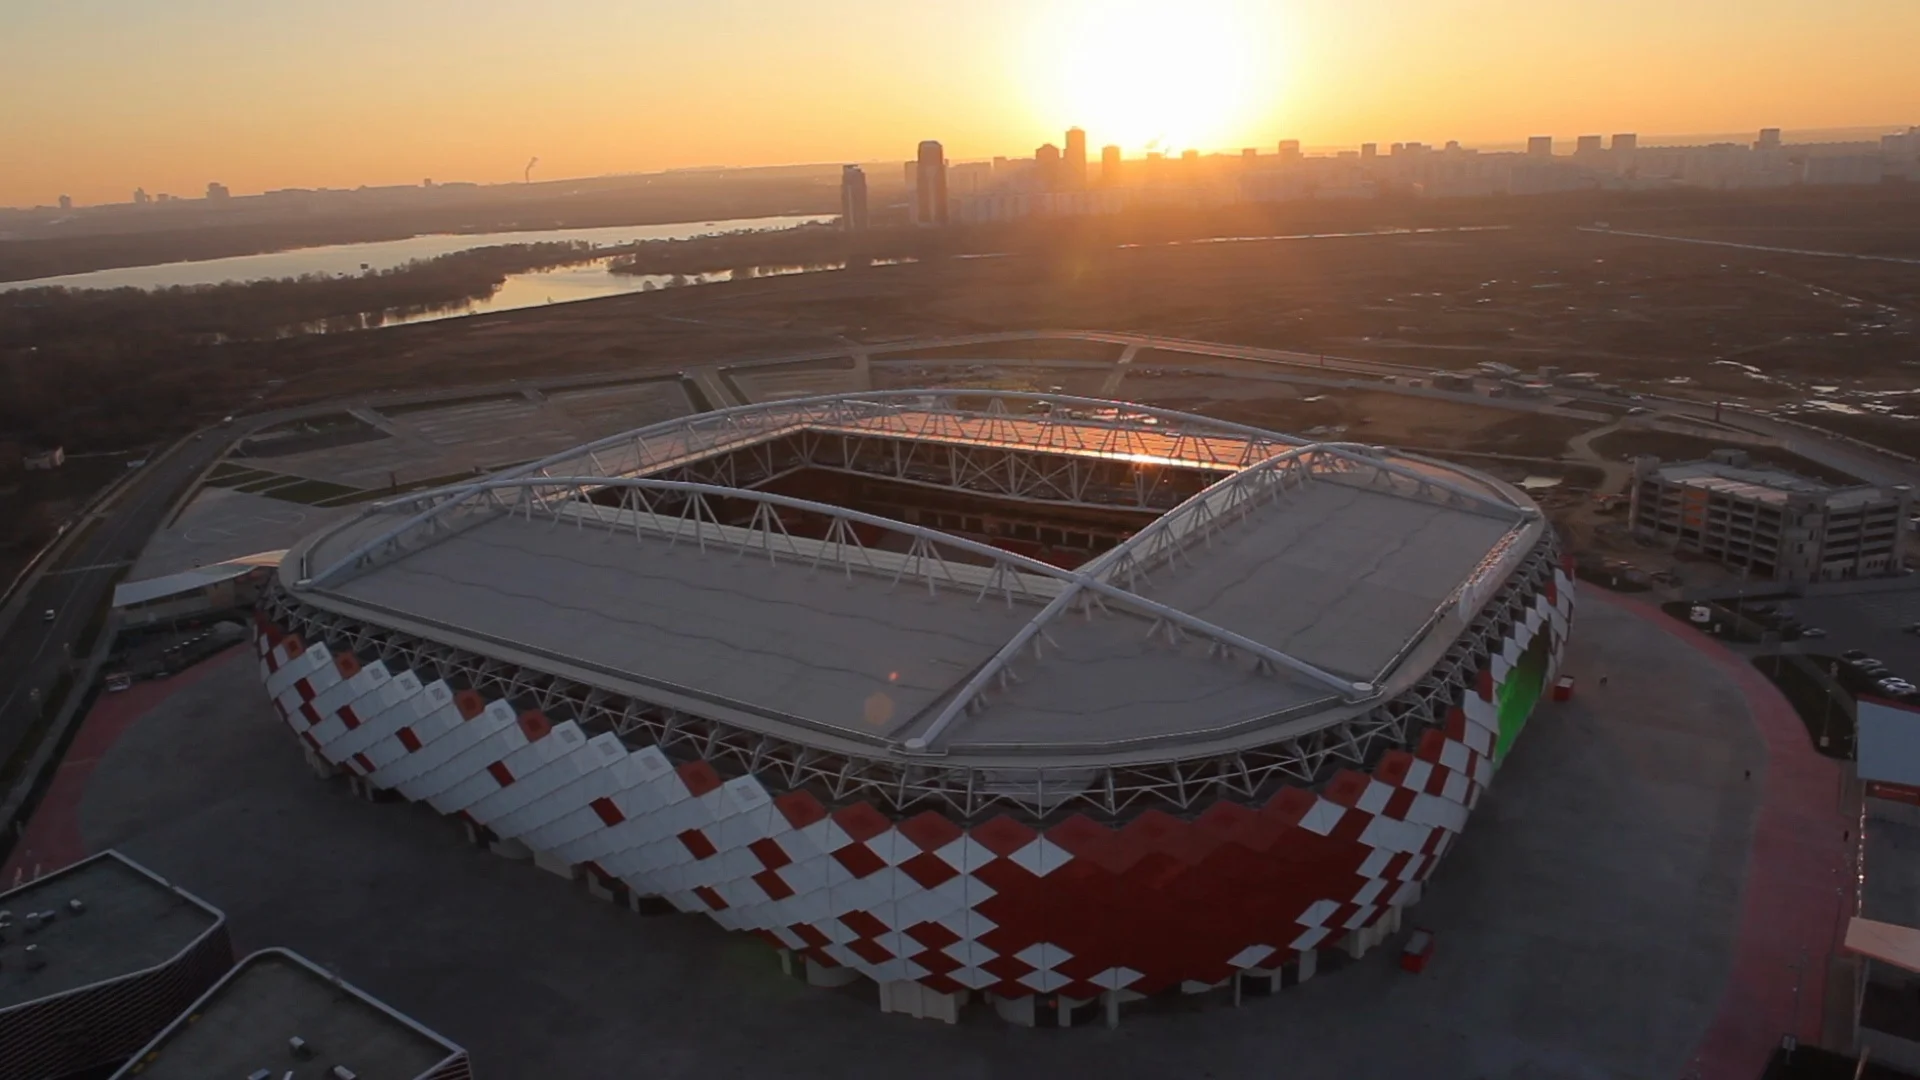 Spartak Stadium (Otkritie Arena) in Moscow – Stock Editorial Photo